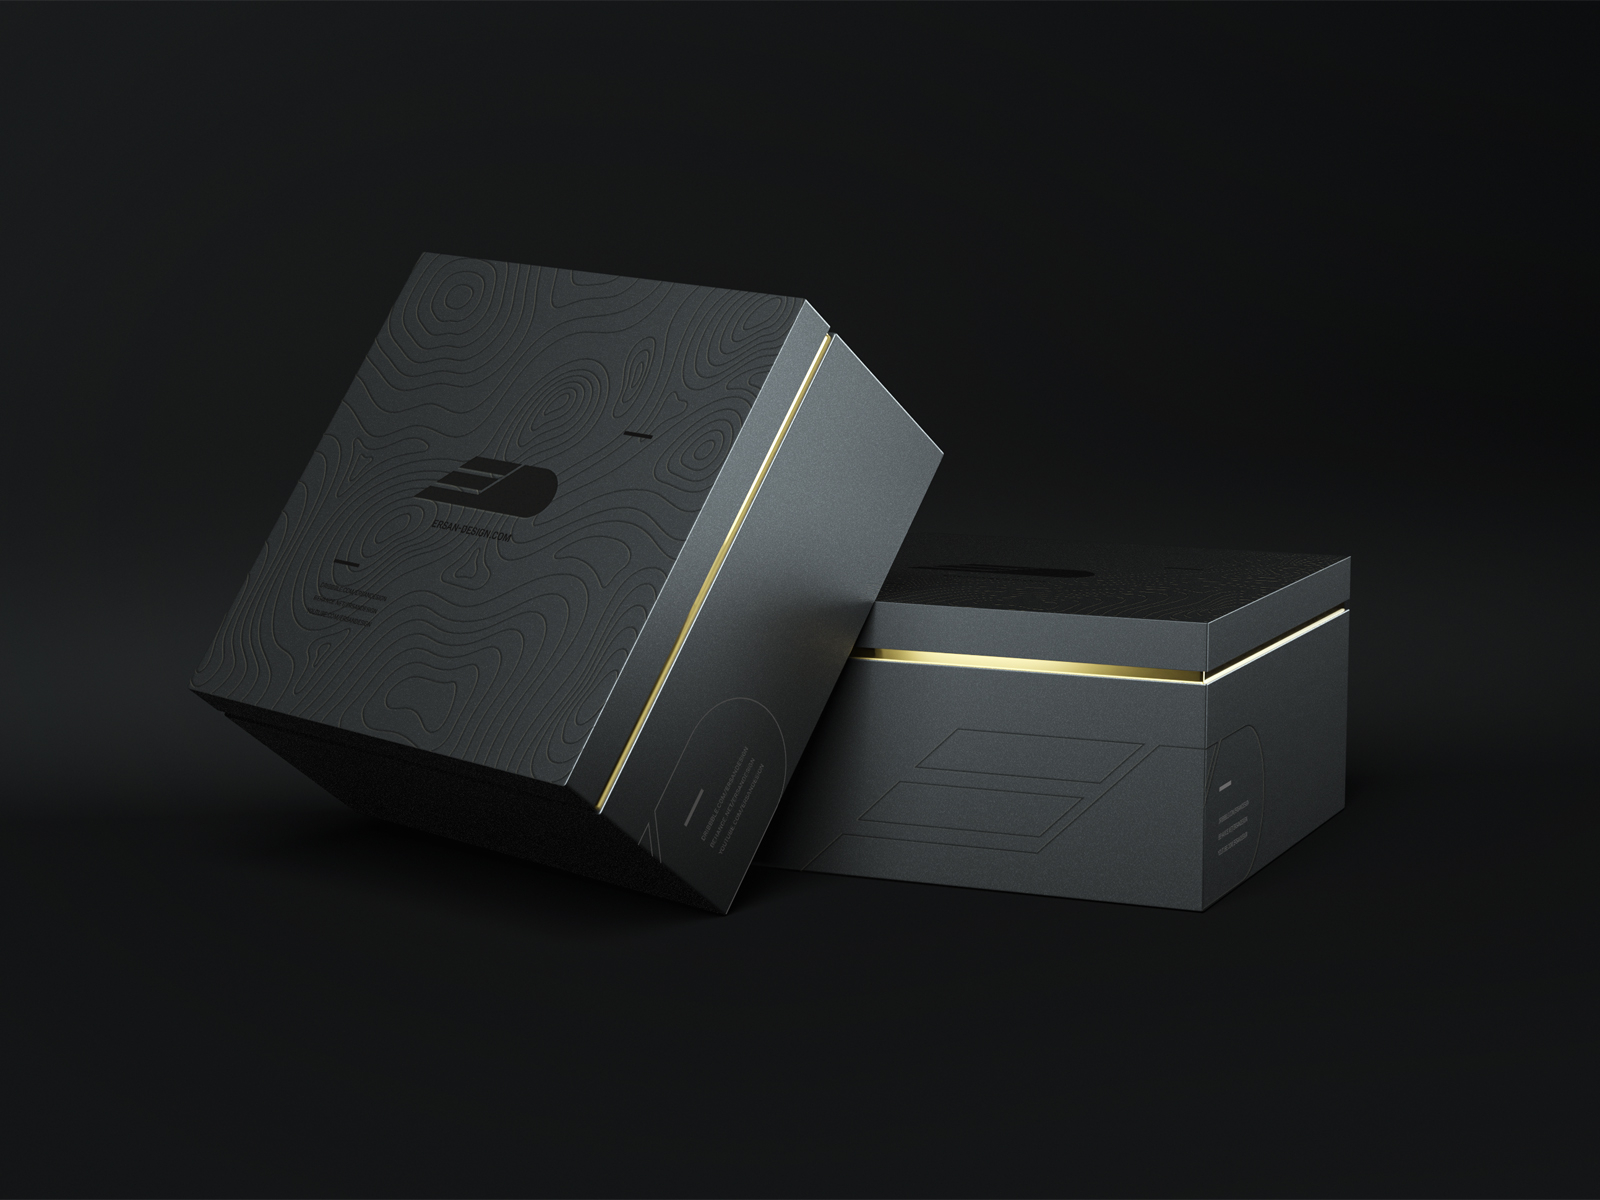 Download Packaging Design Mockup by Ersan Design on Dribbble